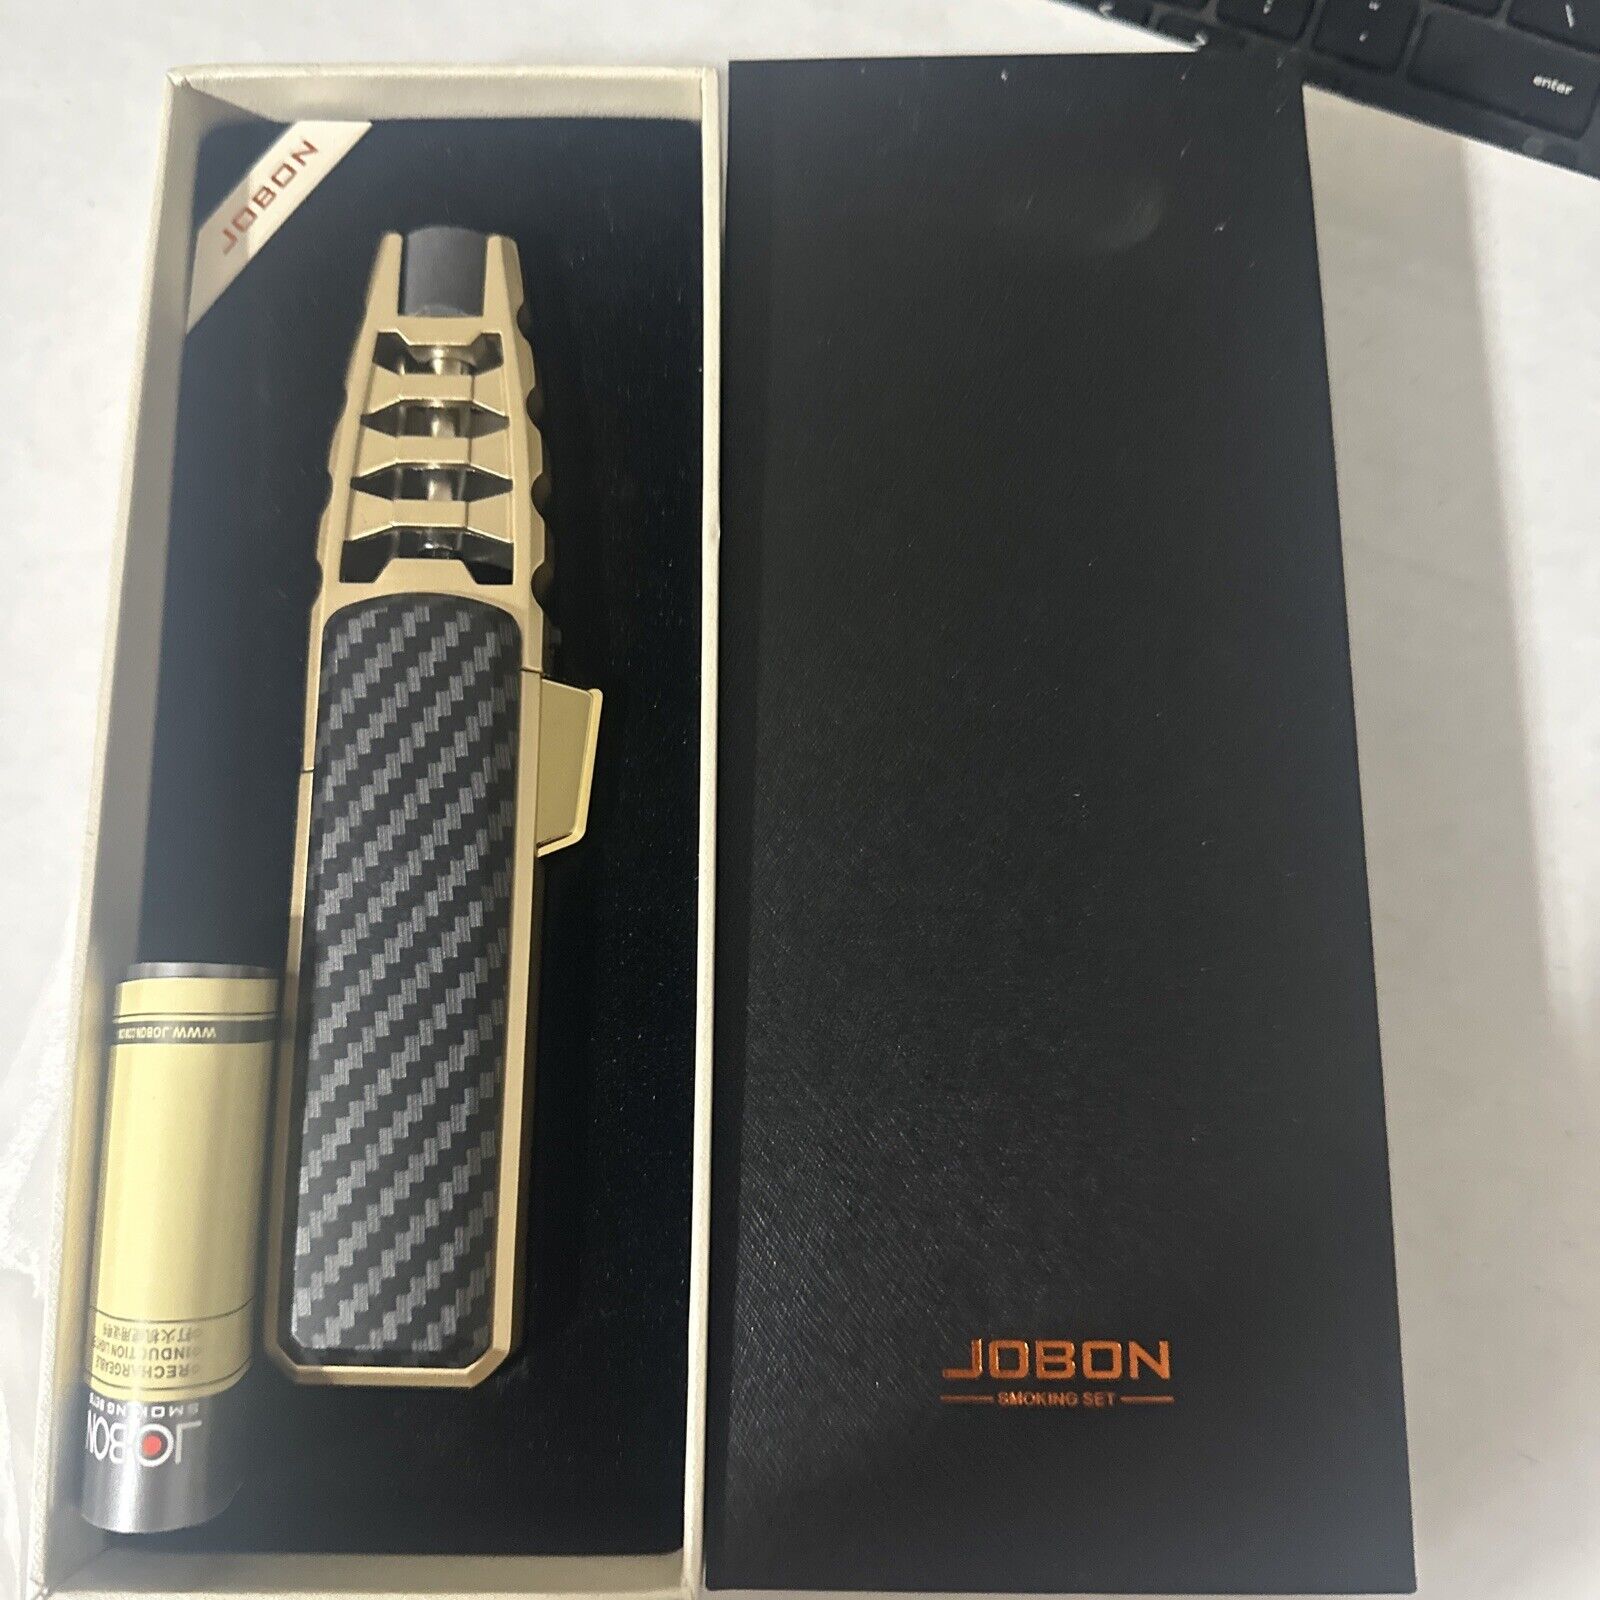 Jobon Smoking Set Lighter Rechargeable Induction Lighter New In Box CJKP10731880